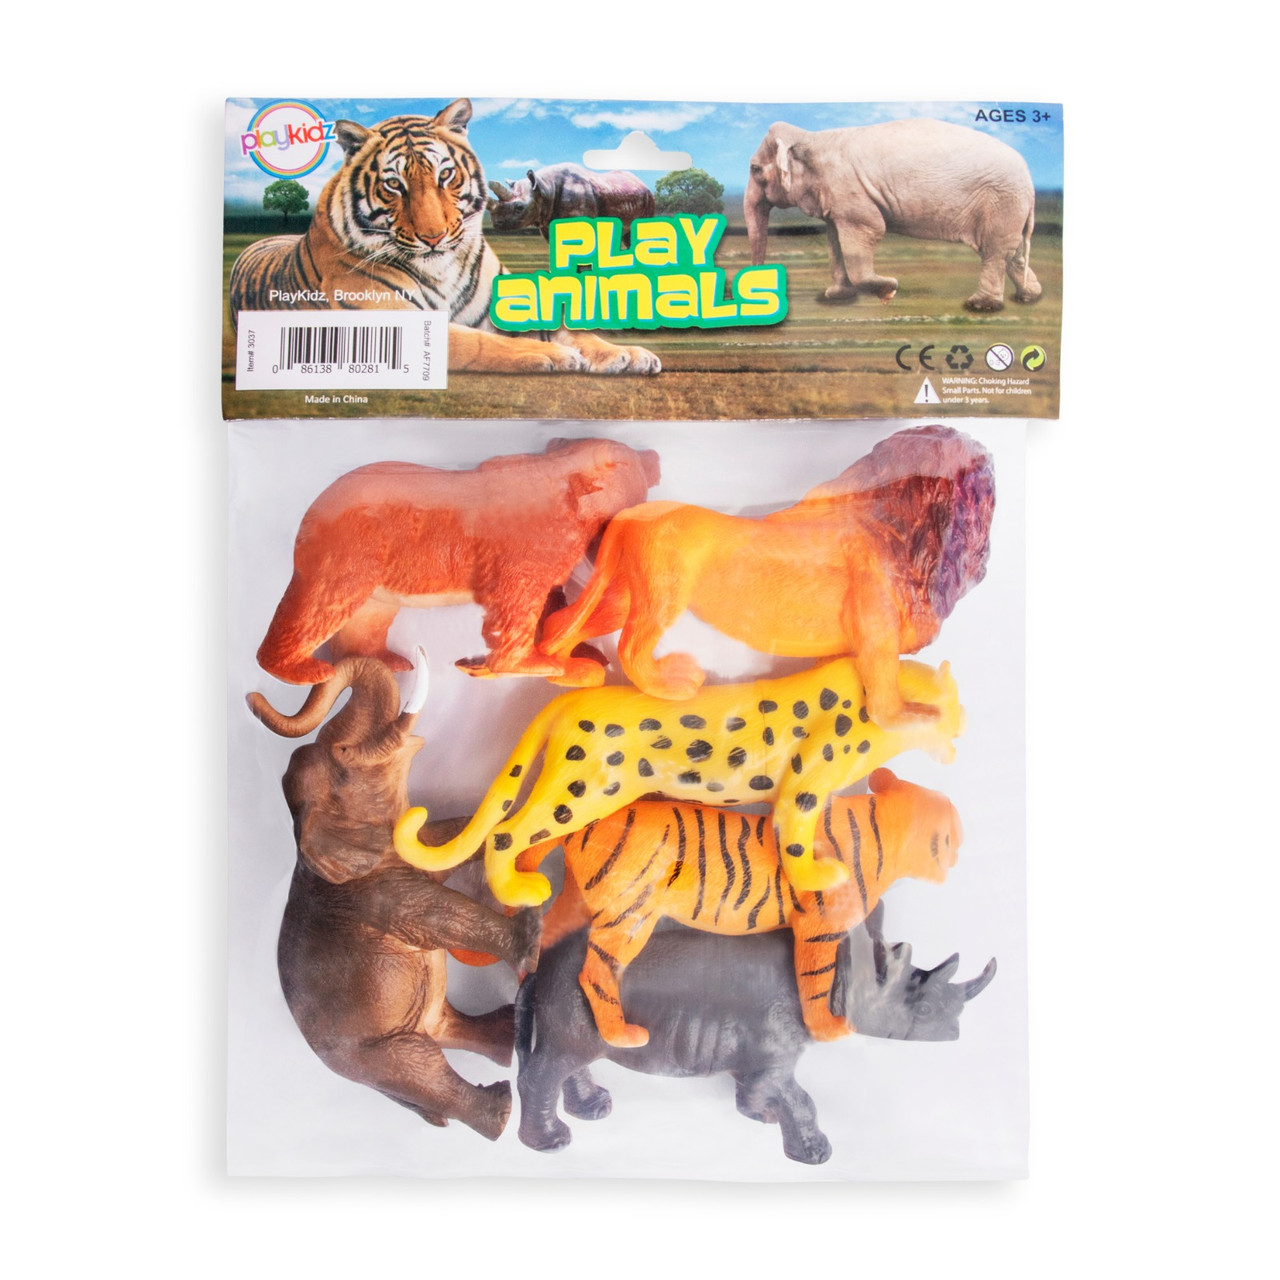 extra large plastic farm animals